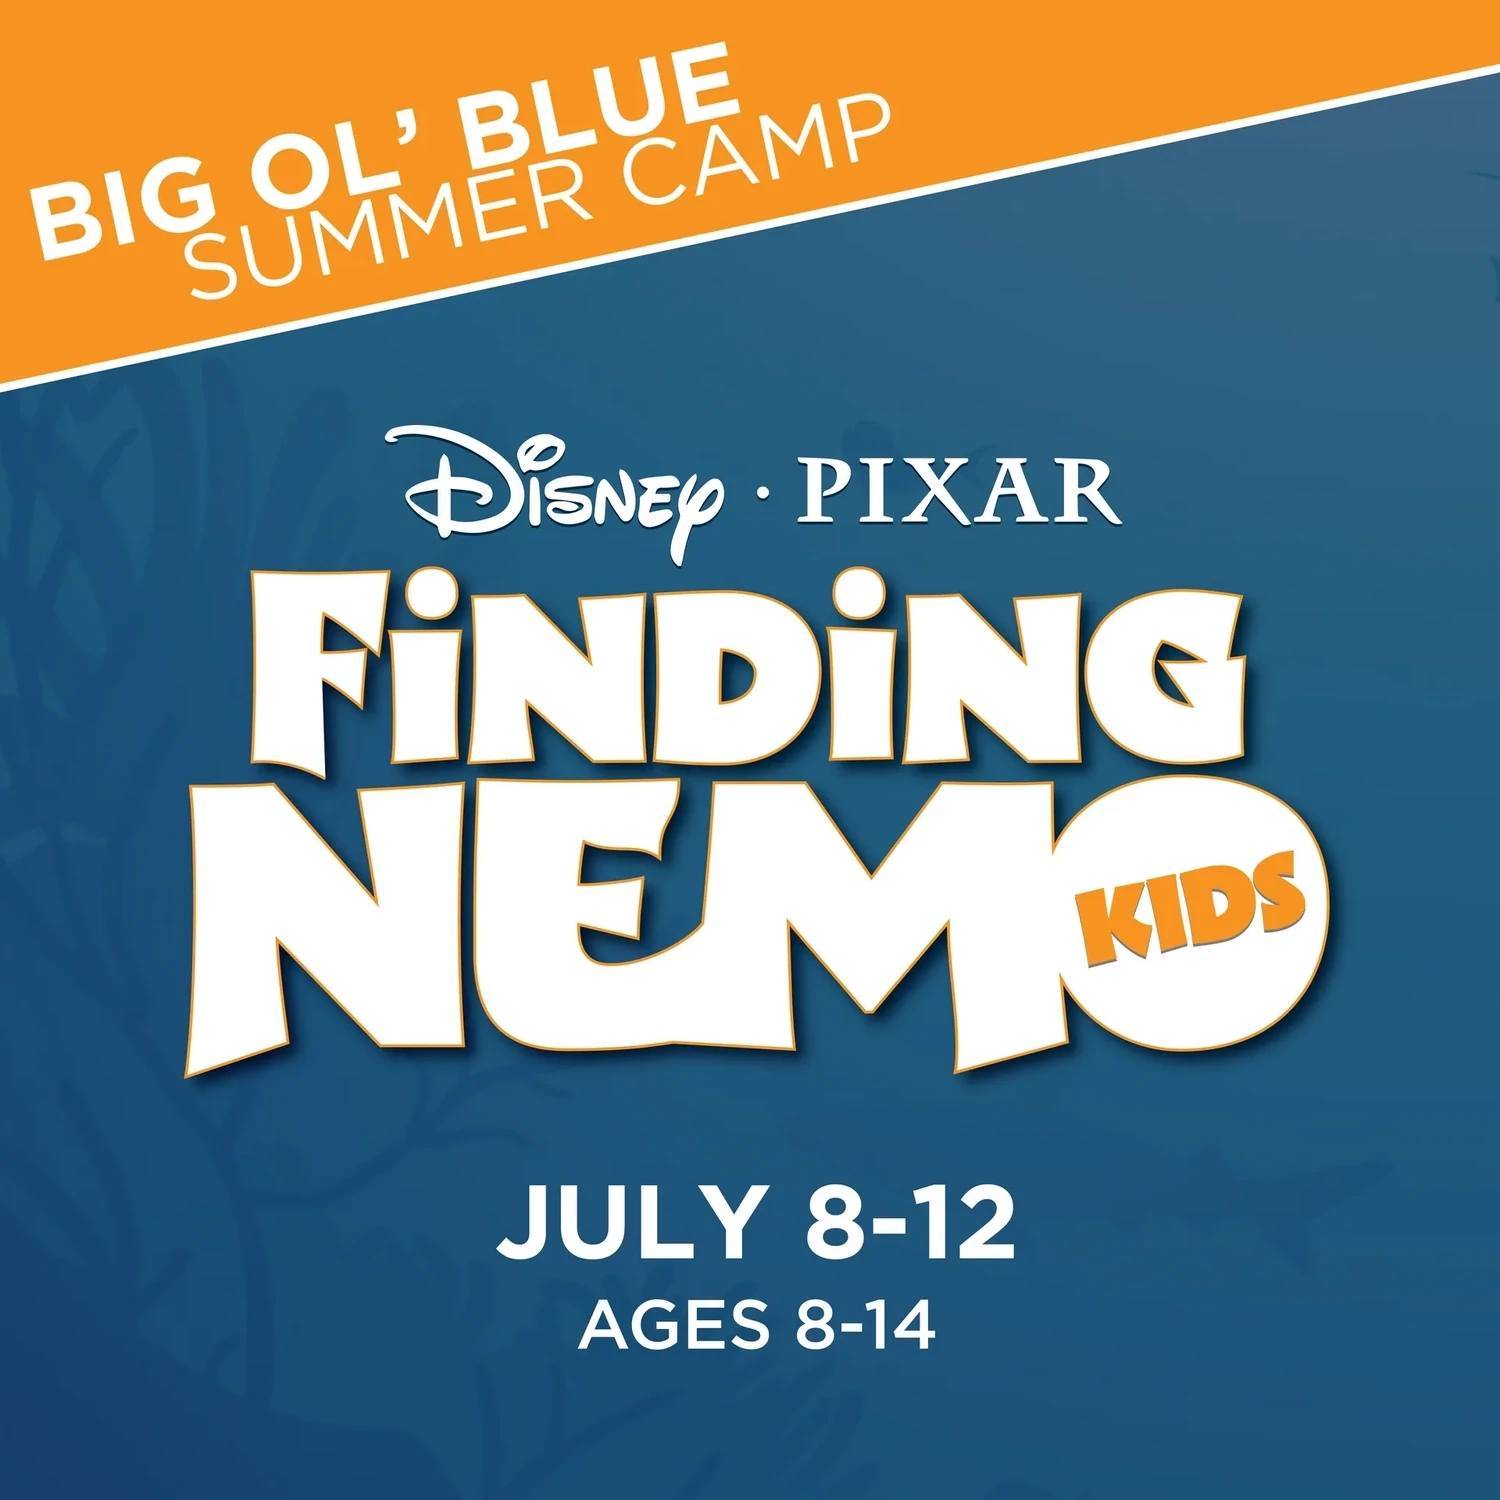 Big 'Ol Blue Summer Camp: Finding Nemo Kids!